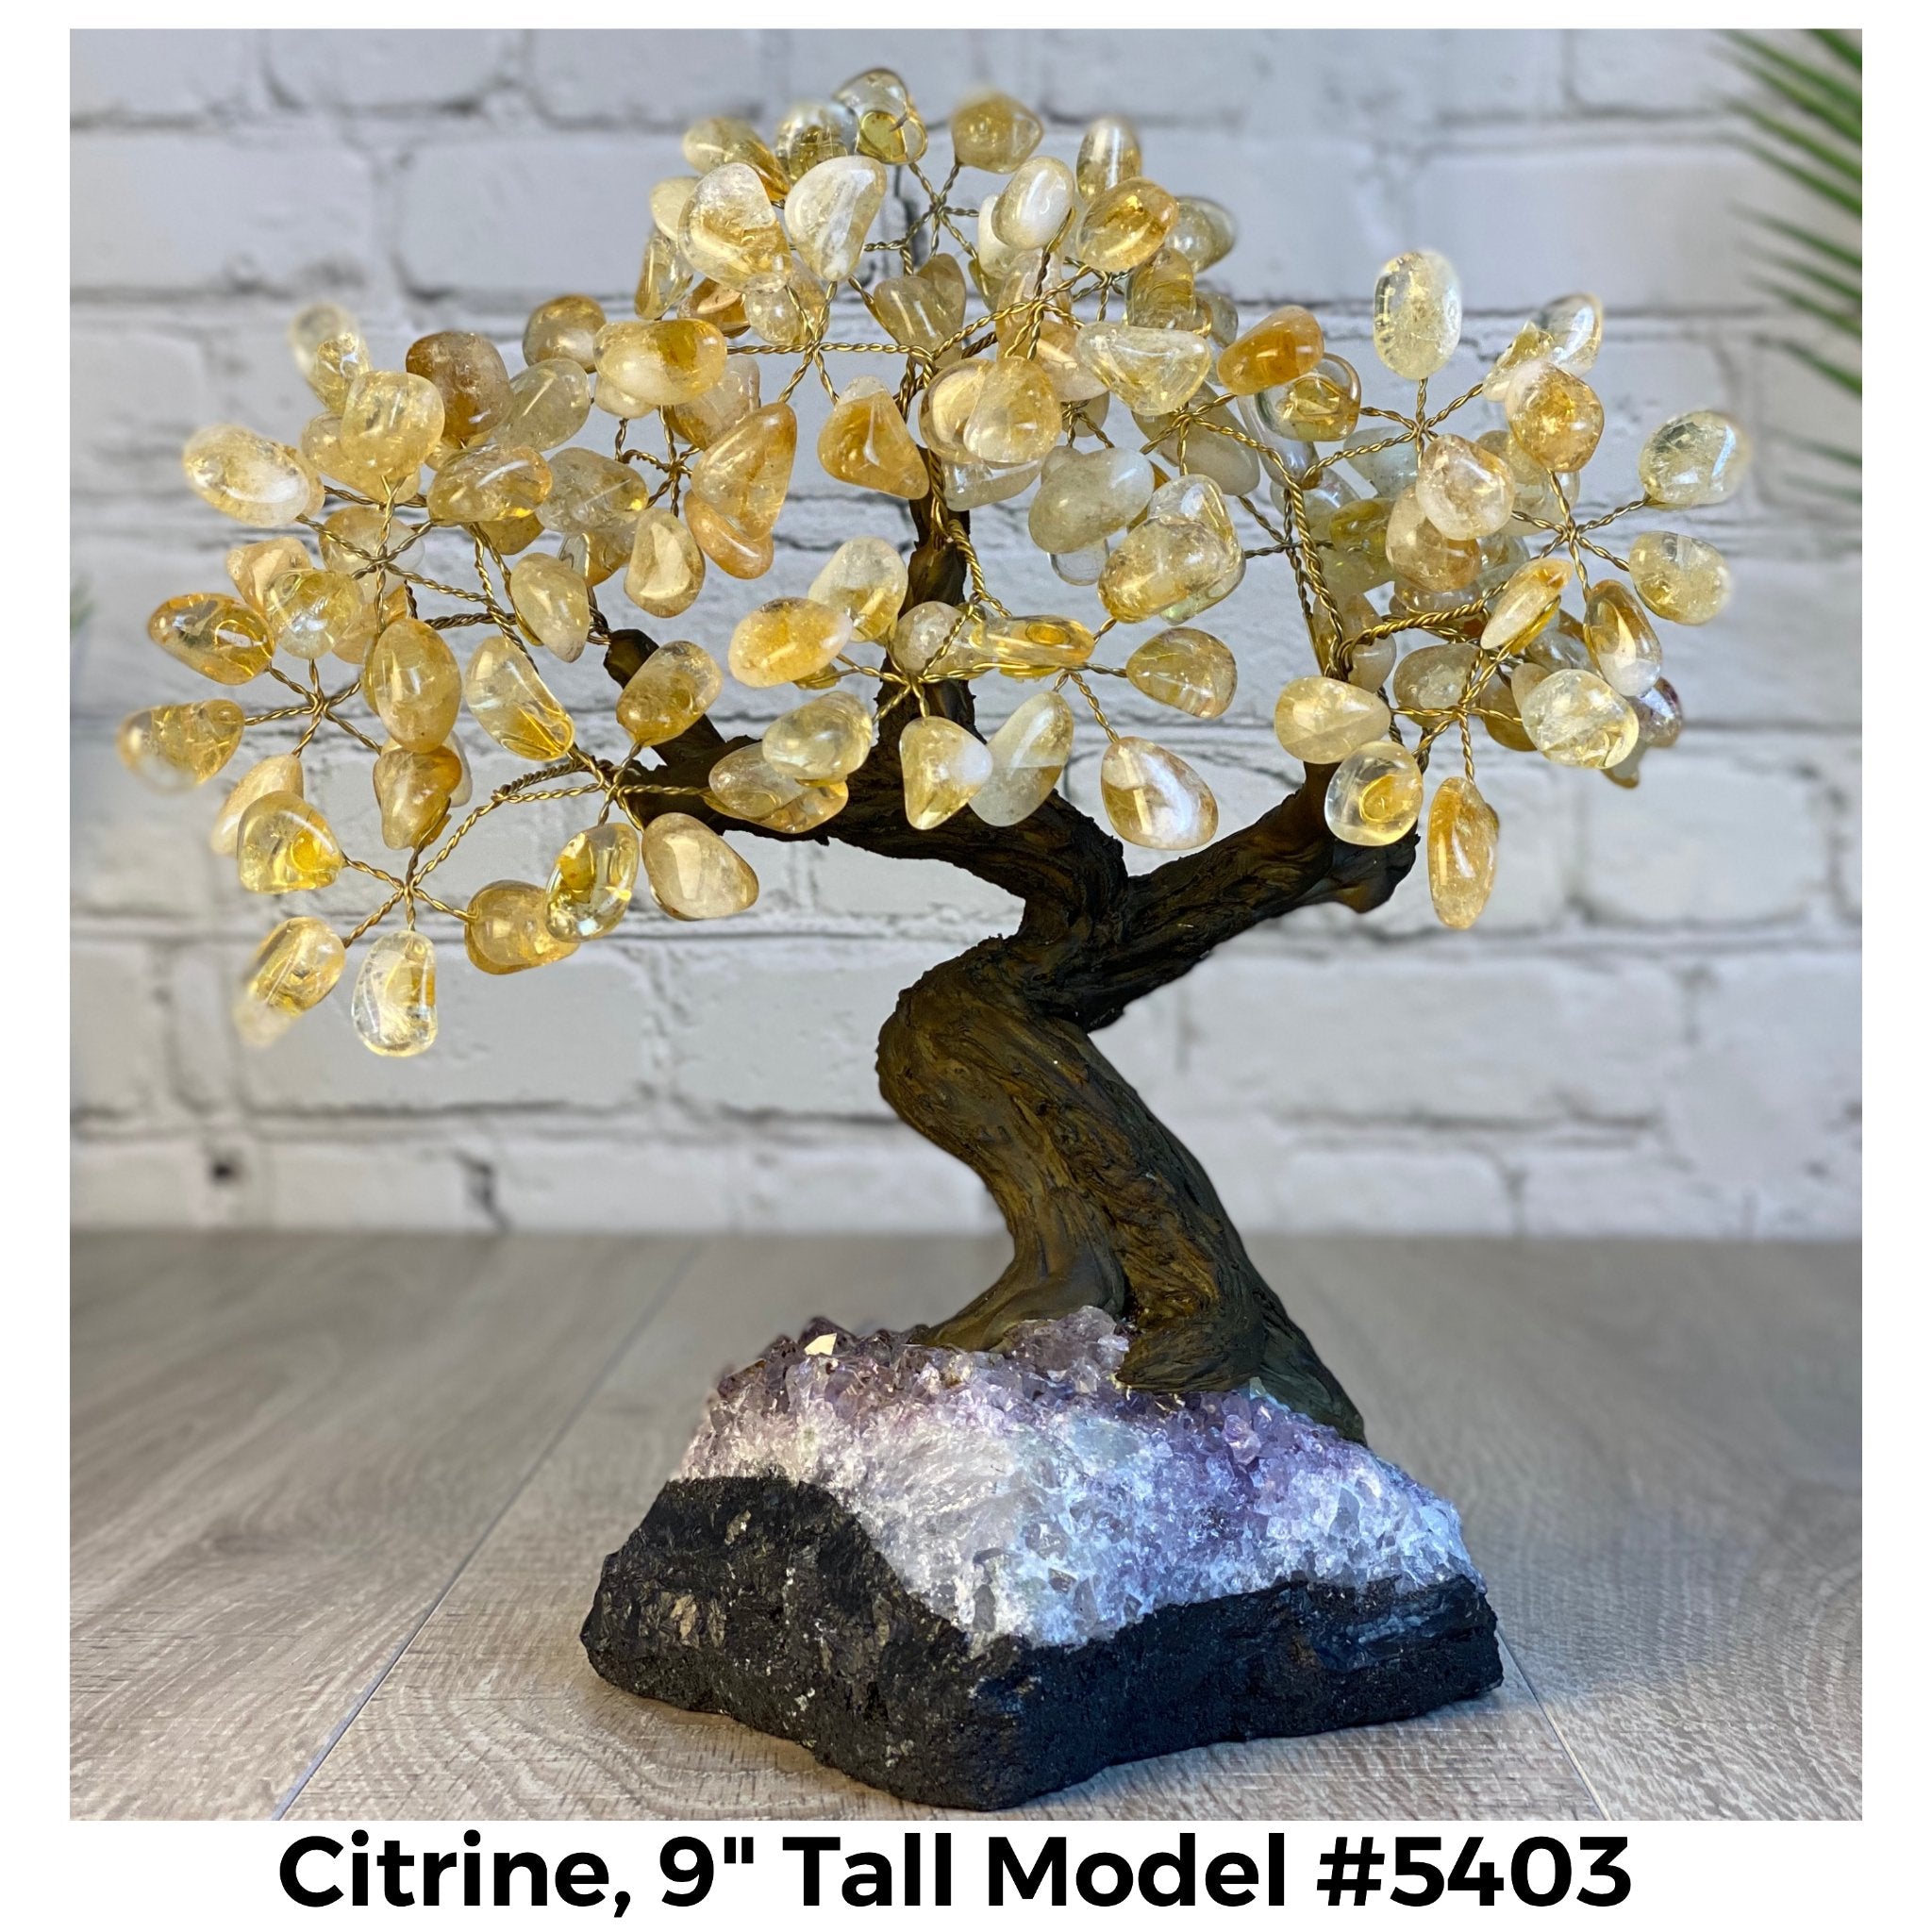 Citrine 9" Tall Handmade Gemstone Tree on a Crystal base, 120 Gems #5403CITR - Brazil GemsBrazil GemsCitrine 9" Tall Handmade Gemstone Tree on a Crystal base, 120 Gems #5403CITRGemstone Trees5403CITR